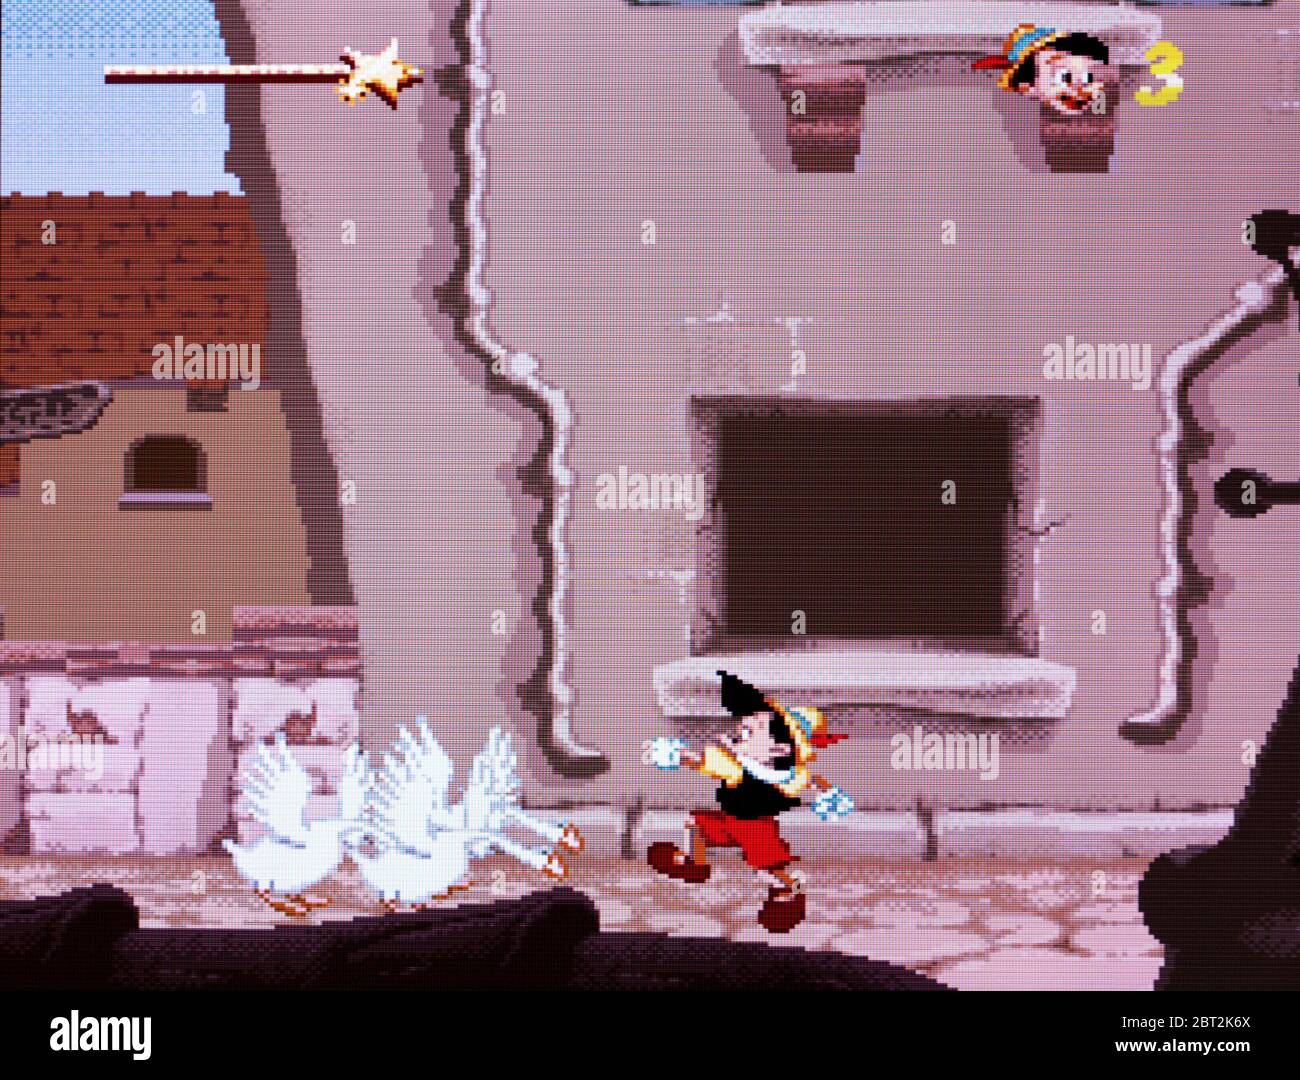 Pinocchio - SNES Super Nintendo - Editorial use only Stock Photo - Alamy